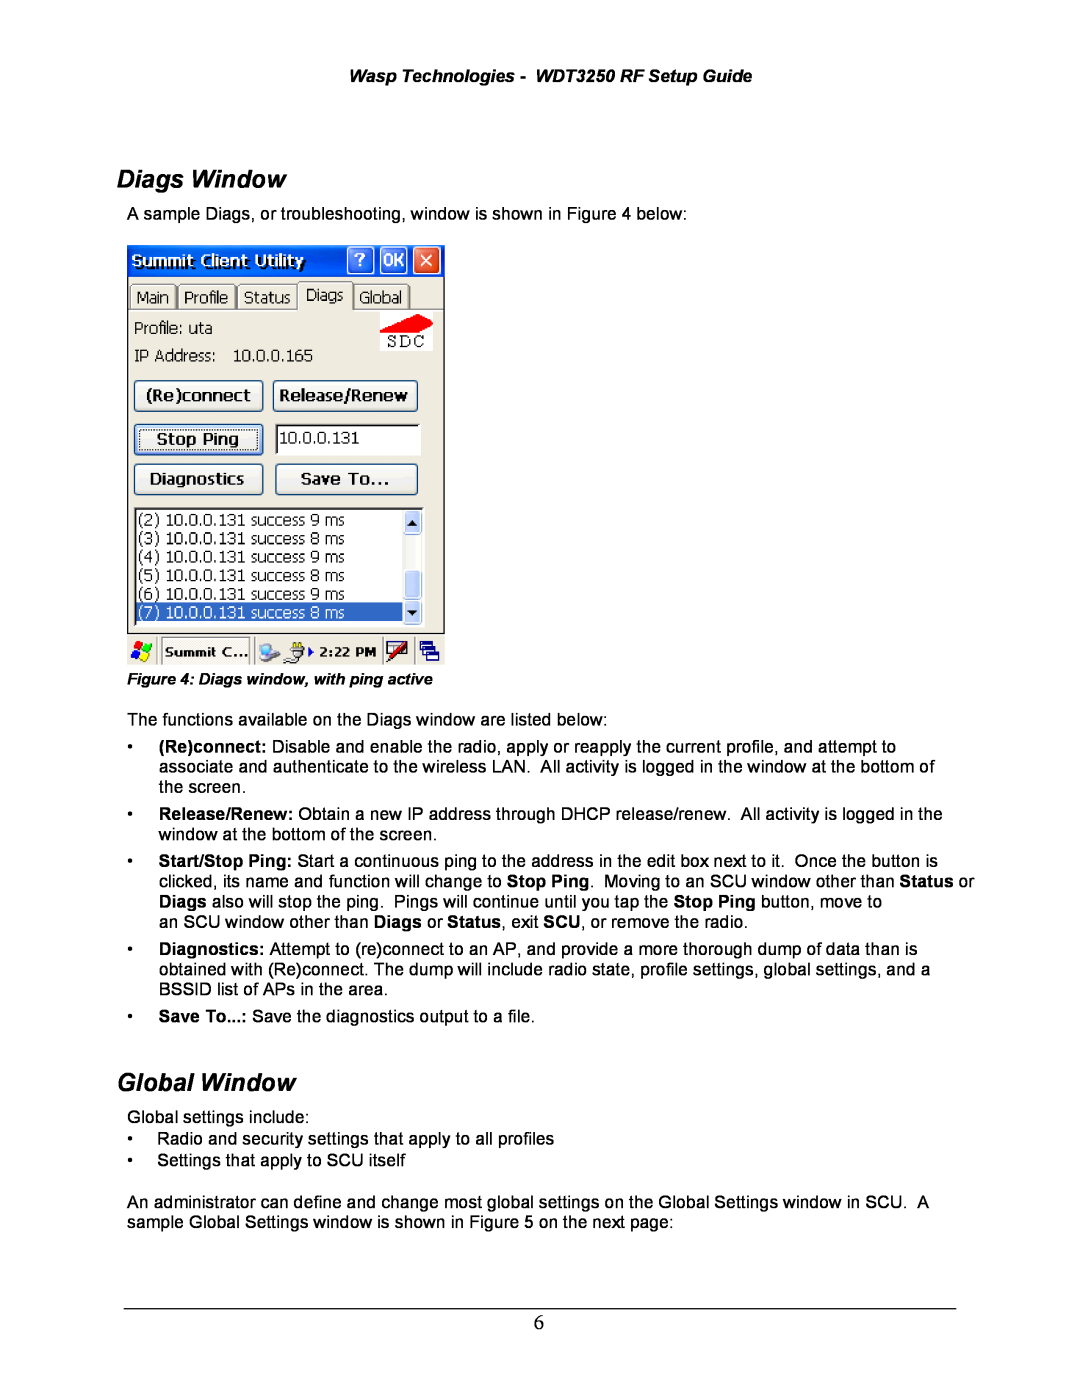 Wasp Bar Code setup guide Diags Window, Global Window, Wasp Technologies - WDT3250 RF Setup Guide 